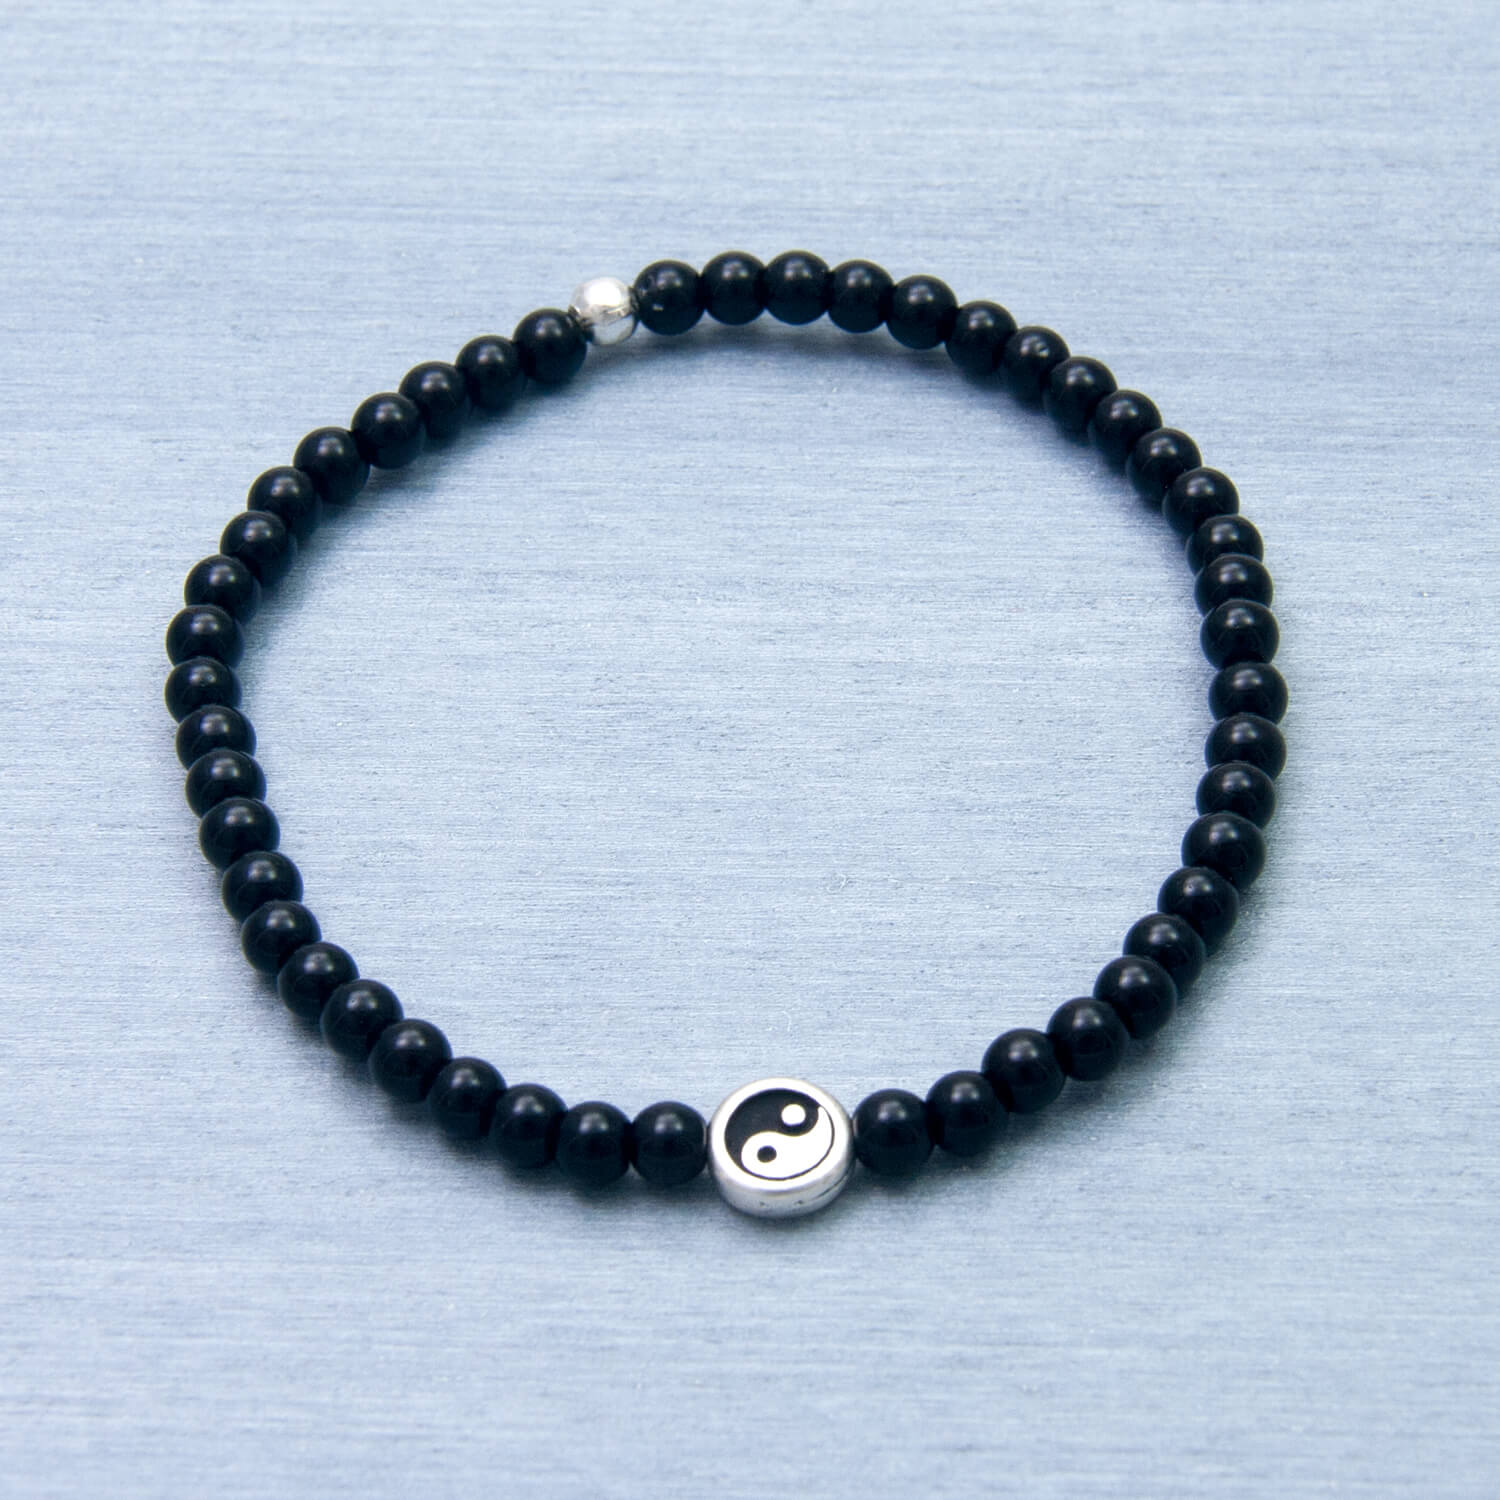 yin yang bracelet couple | eBay